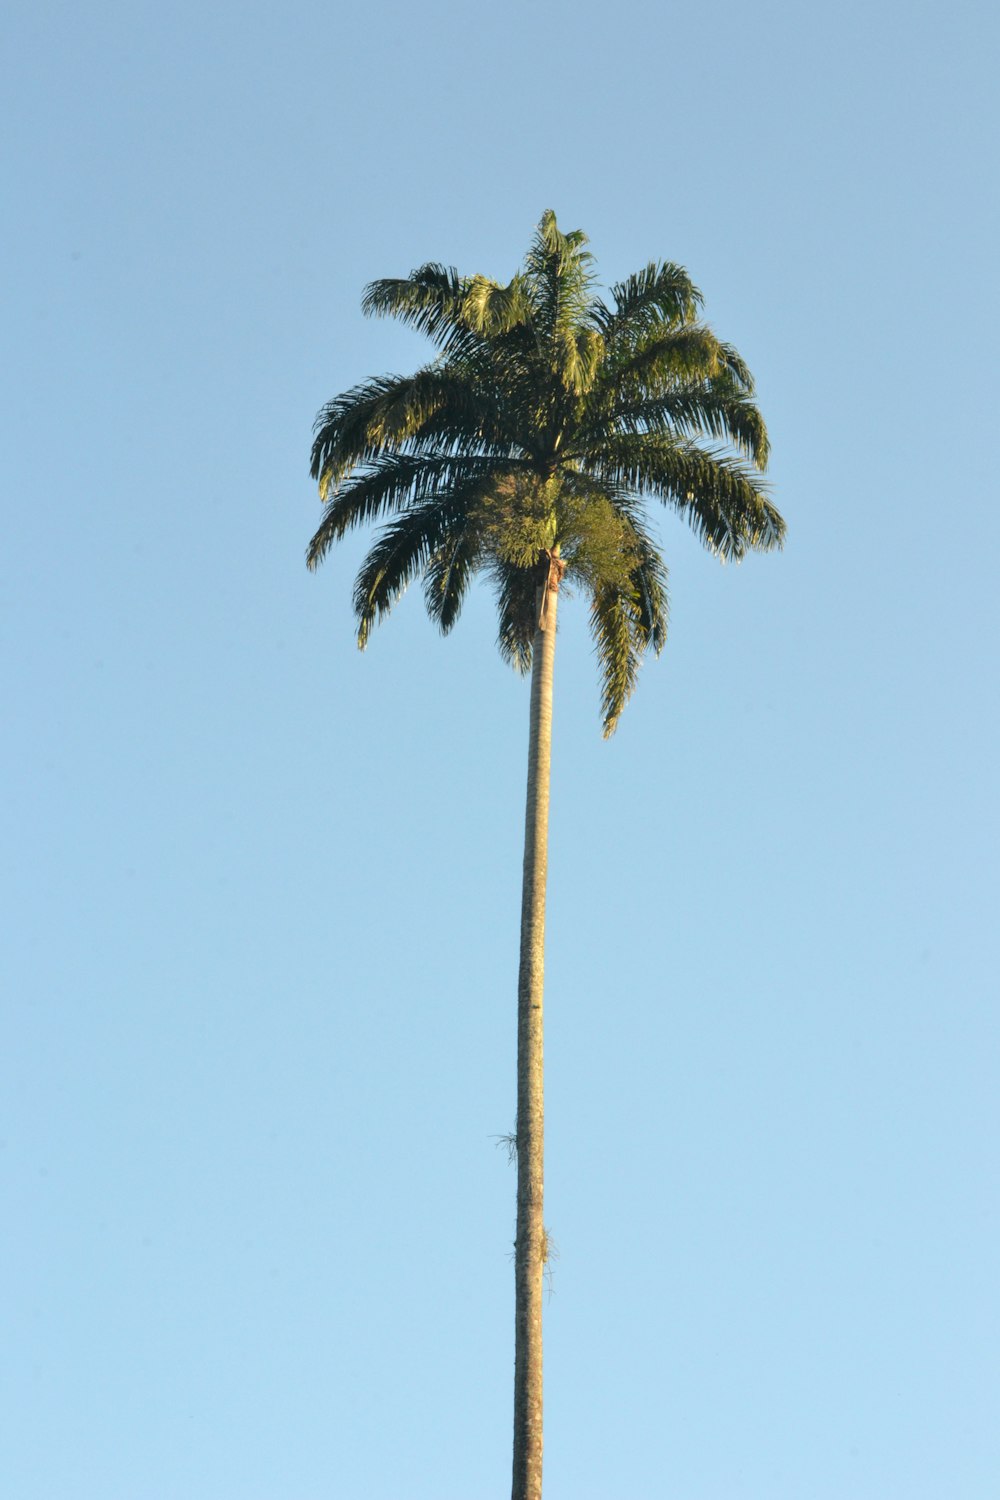 a tall palm tree against a blue sky